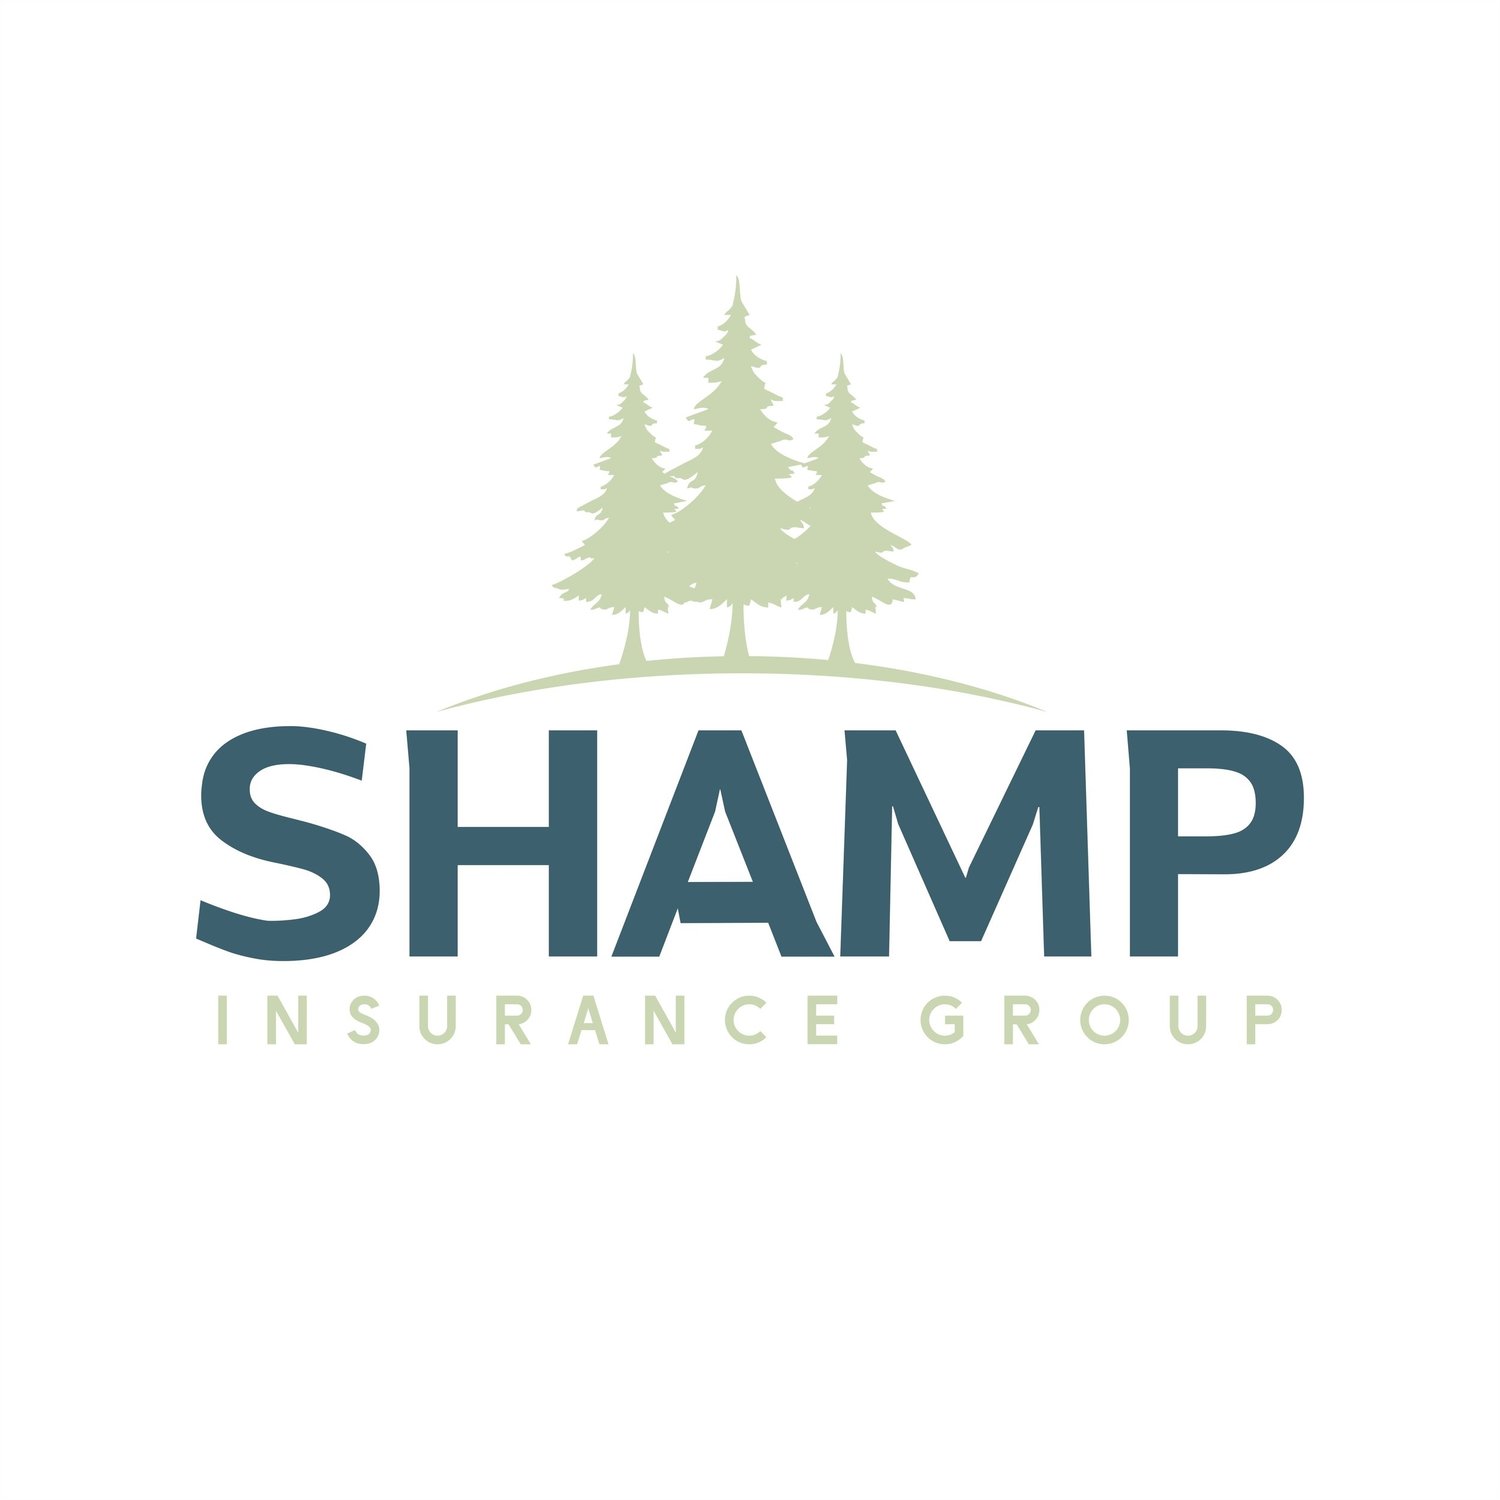 Shamp Insurance Group